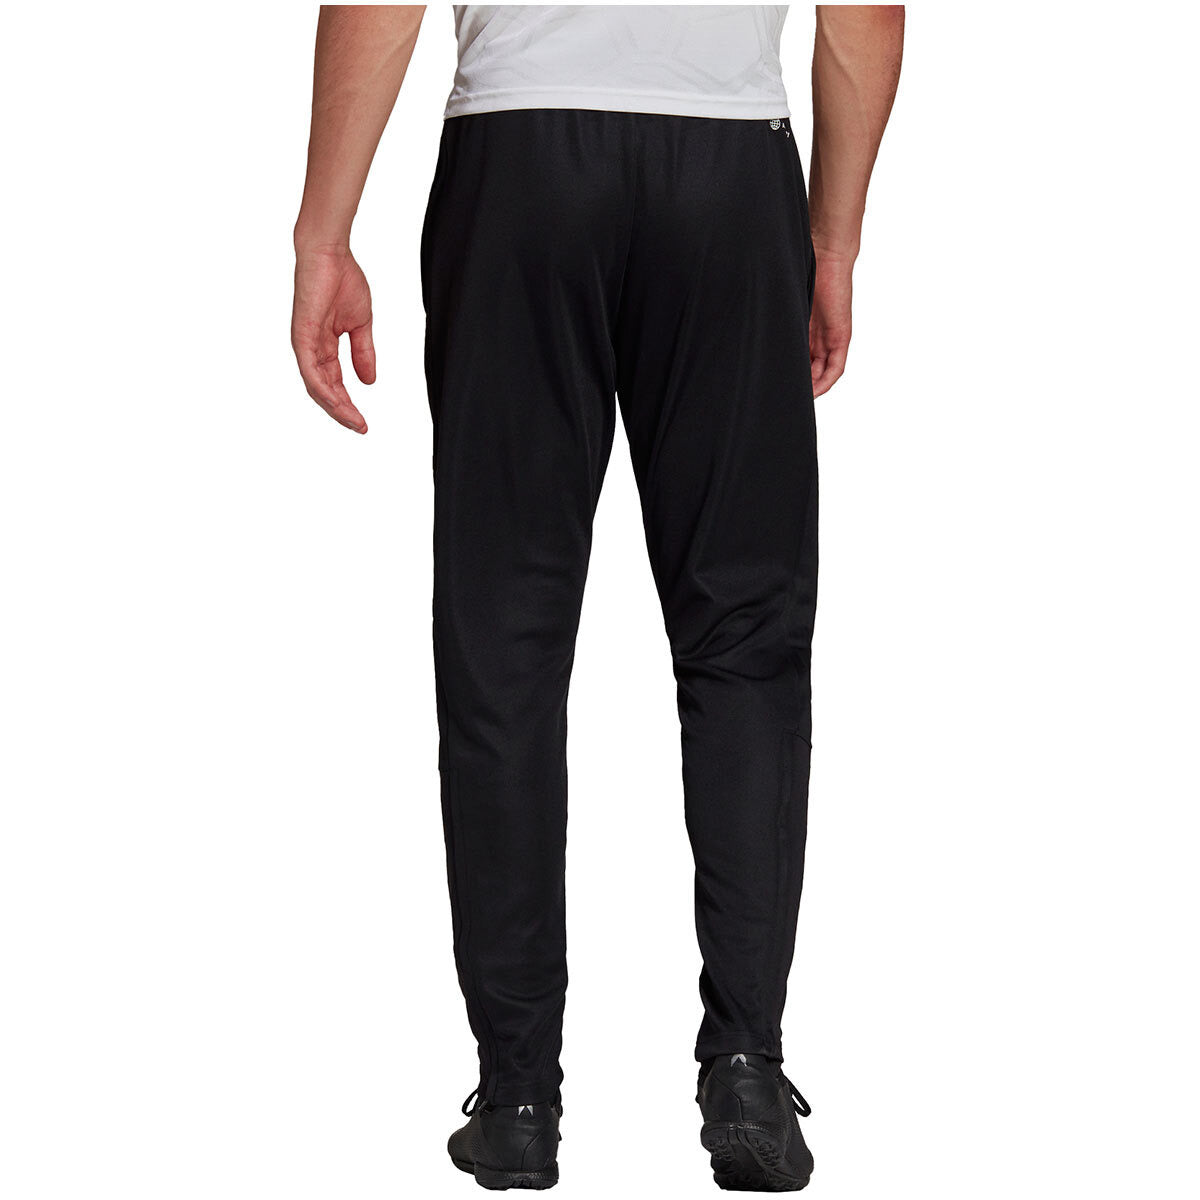 Adidas Trefoil BlackWhite 3 Stripe Soccer Track pants joggers cuffed VTG  logo  eBay